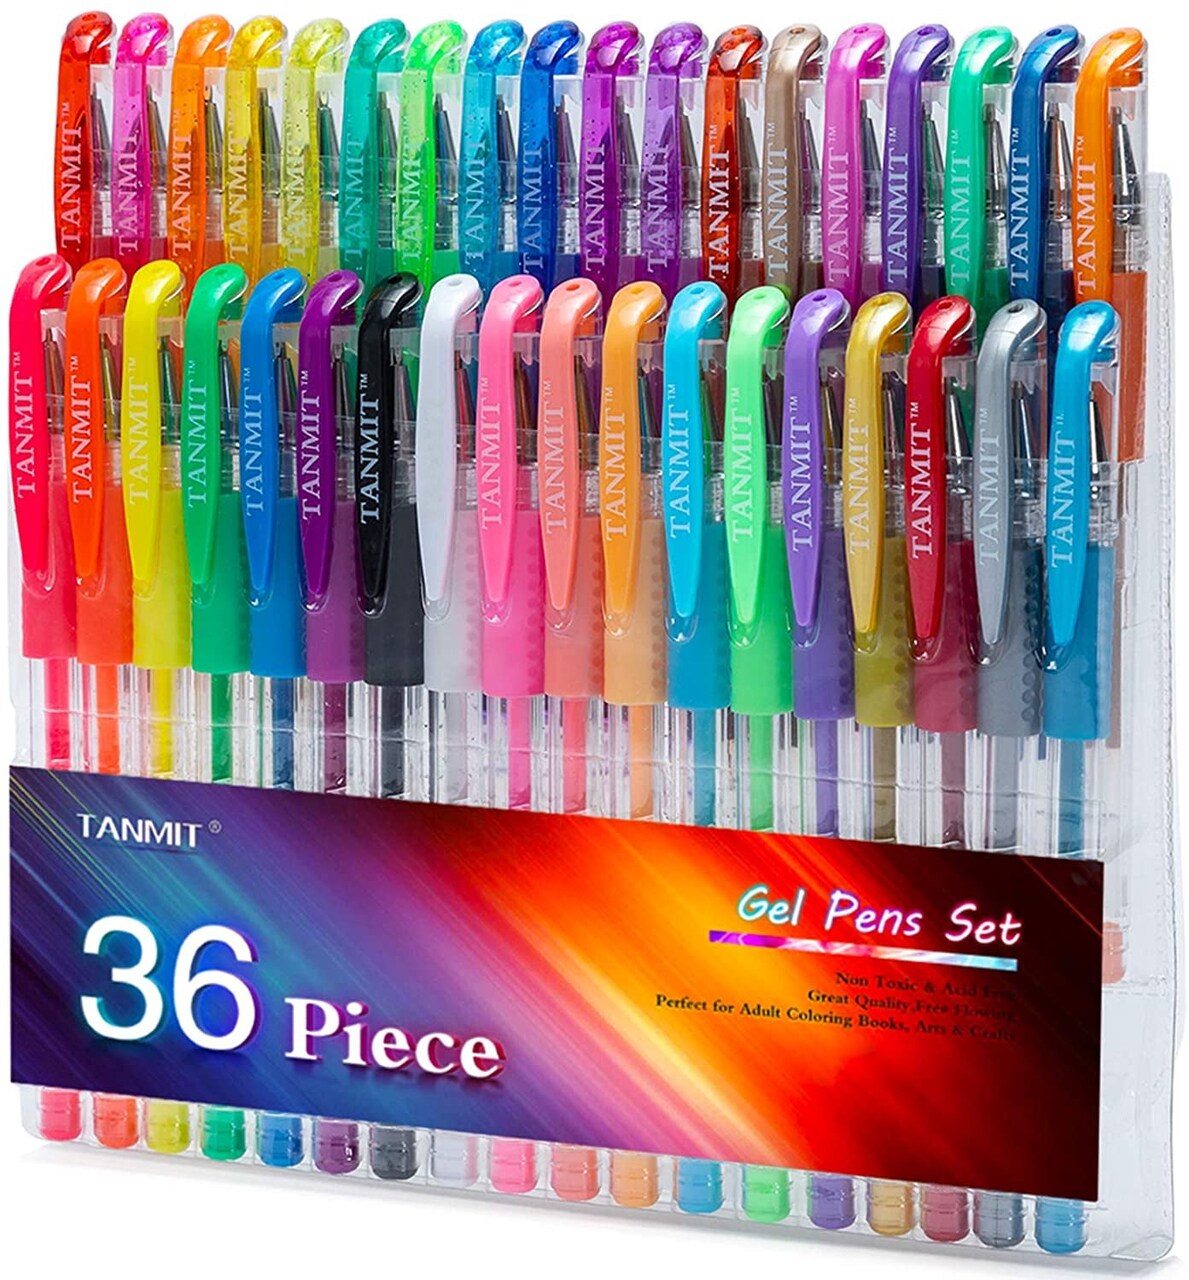 Gel Pens, 36 Colors Gel Pens Set for Adult Coloring Books, Colored